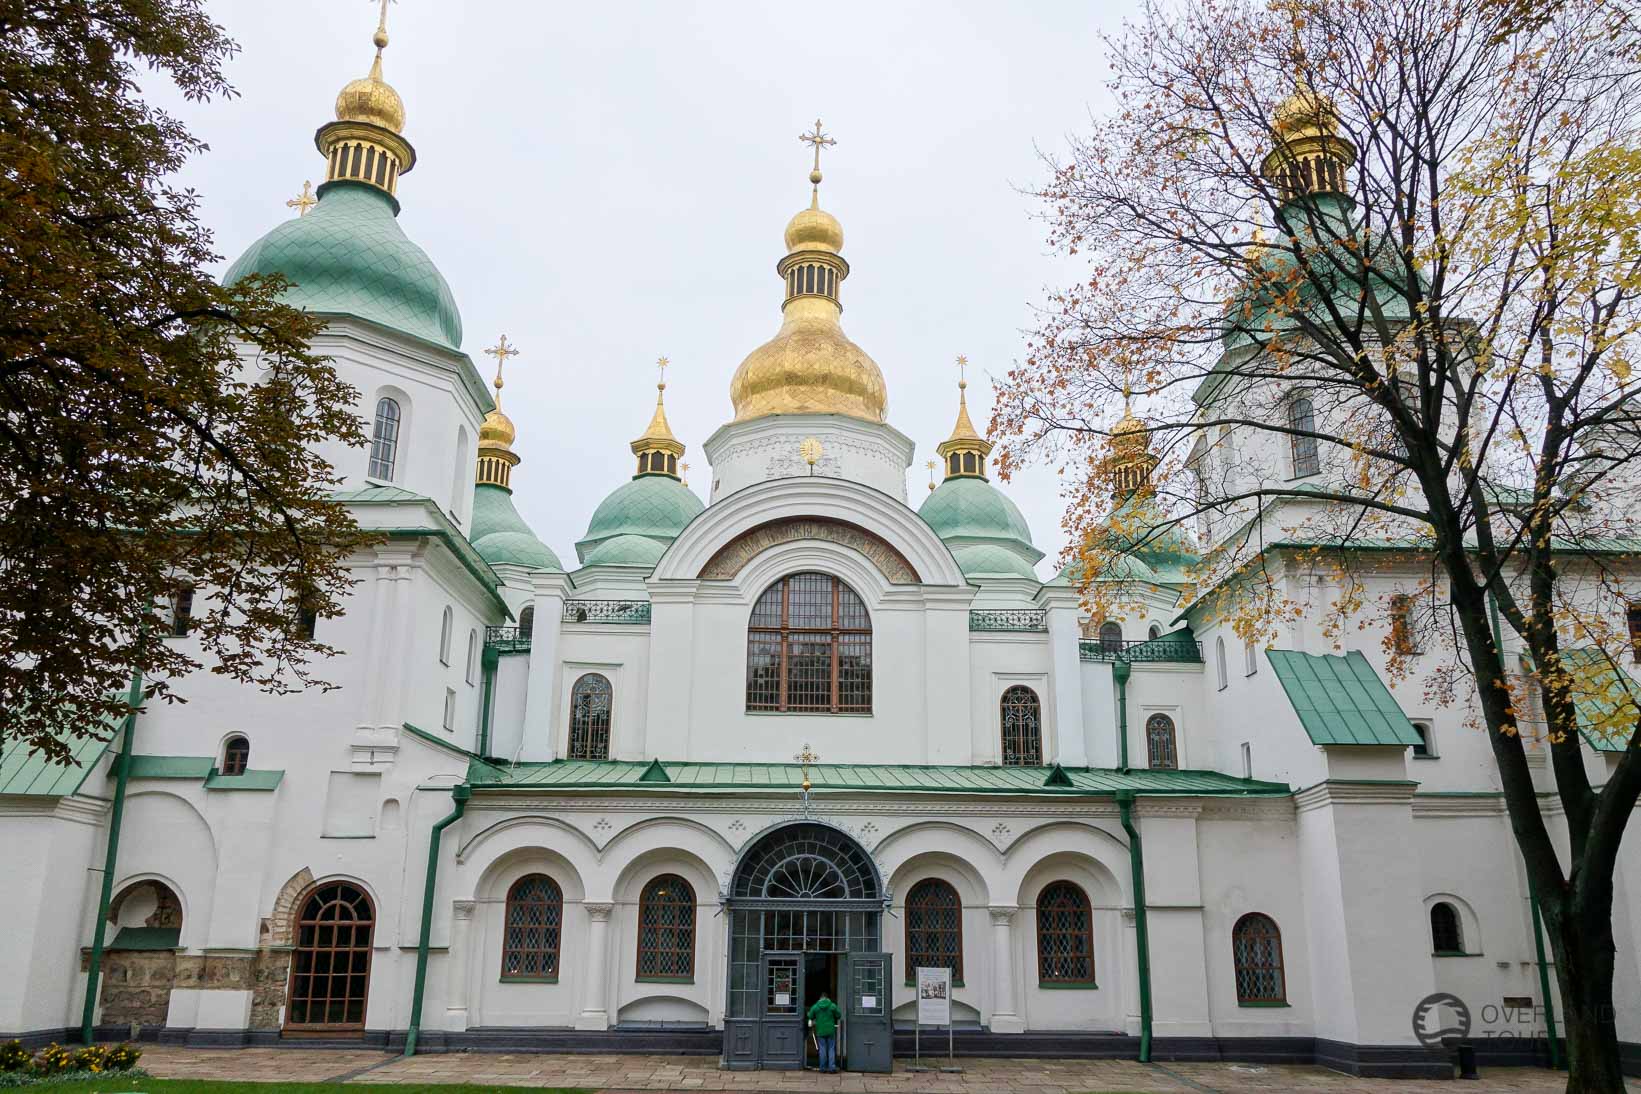 Top 11 Sehenswürdigkeit Kiew inkl. Karte | Overlandtour